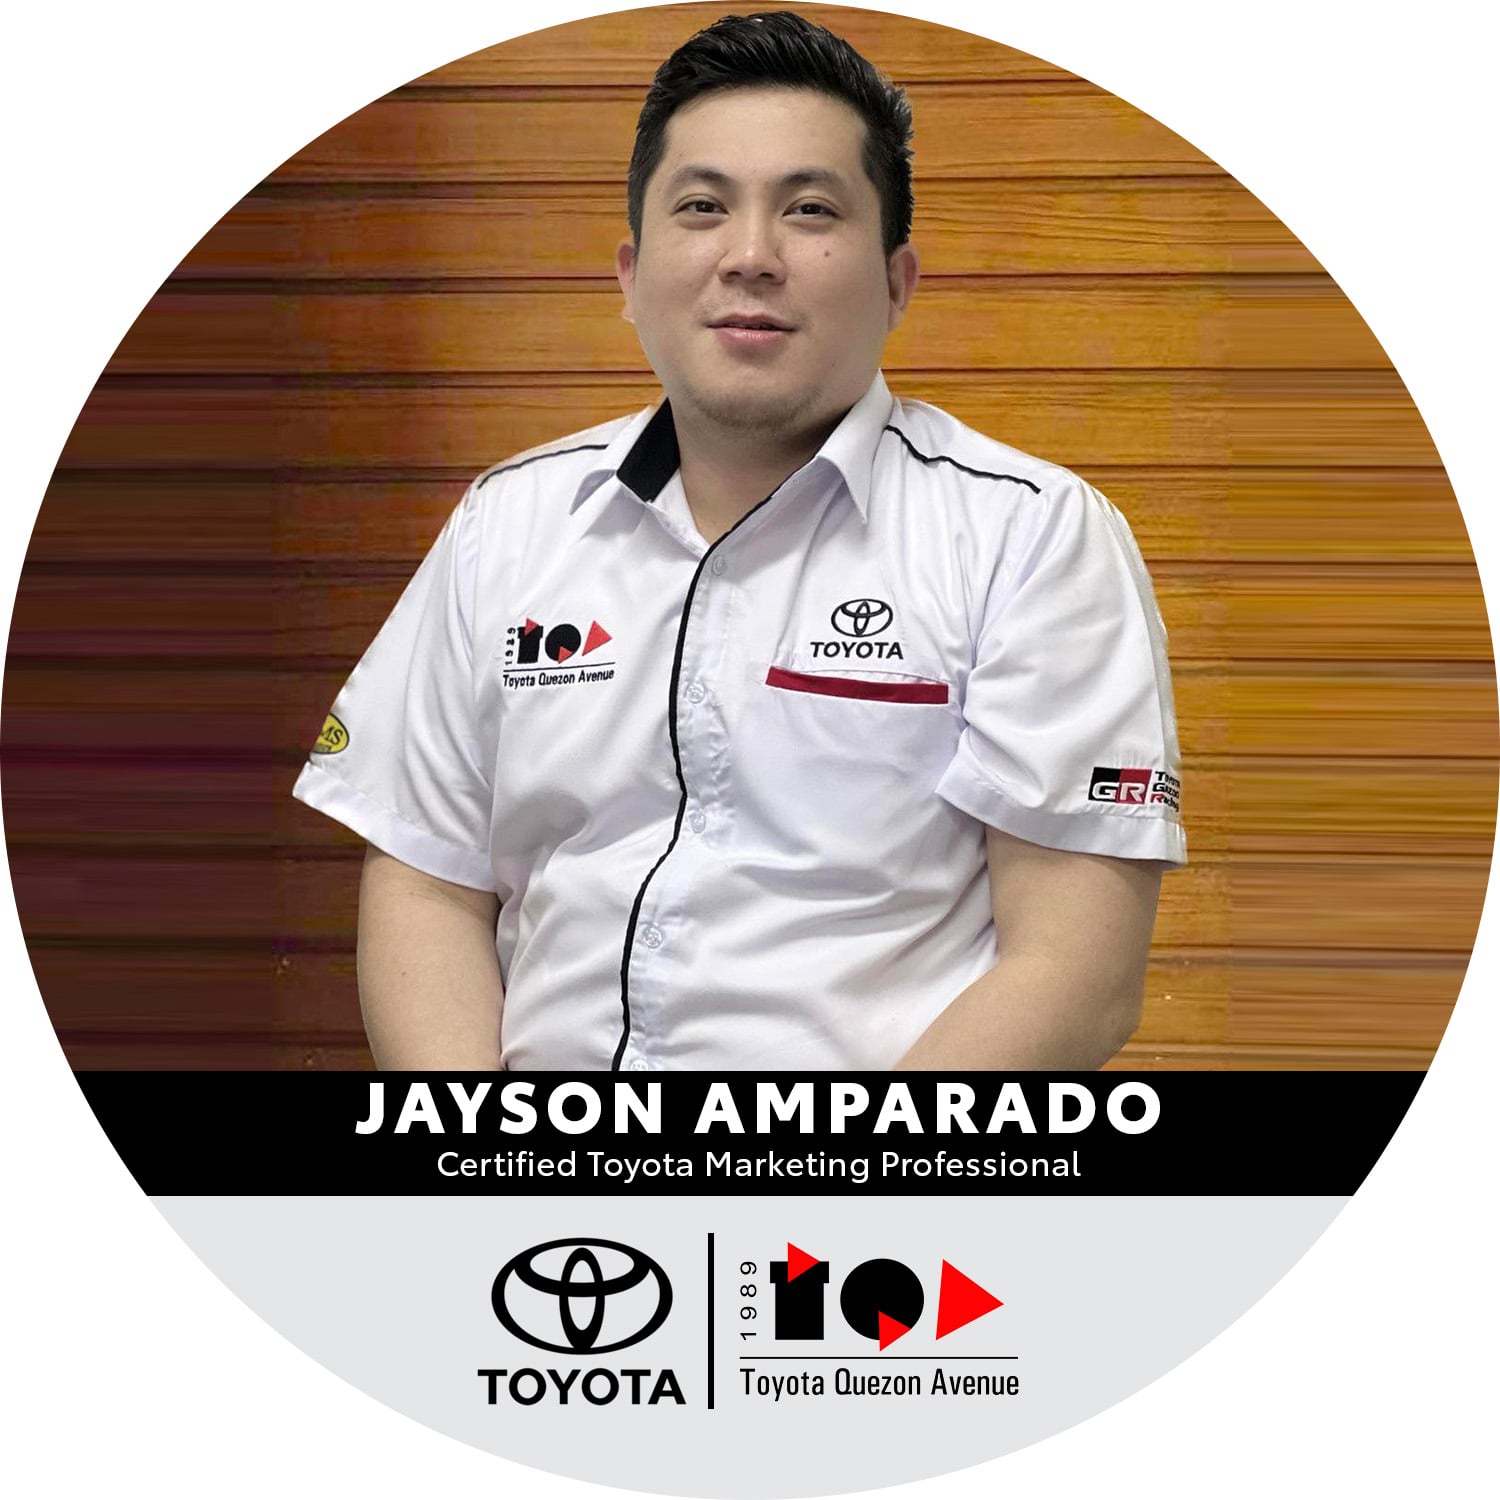 Certified Toyota Marketing Professionals - Jayson Amparado